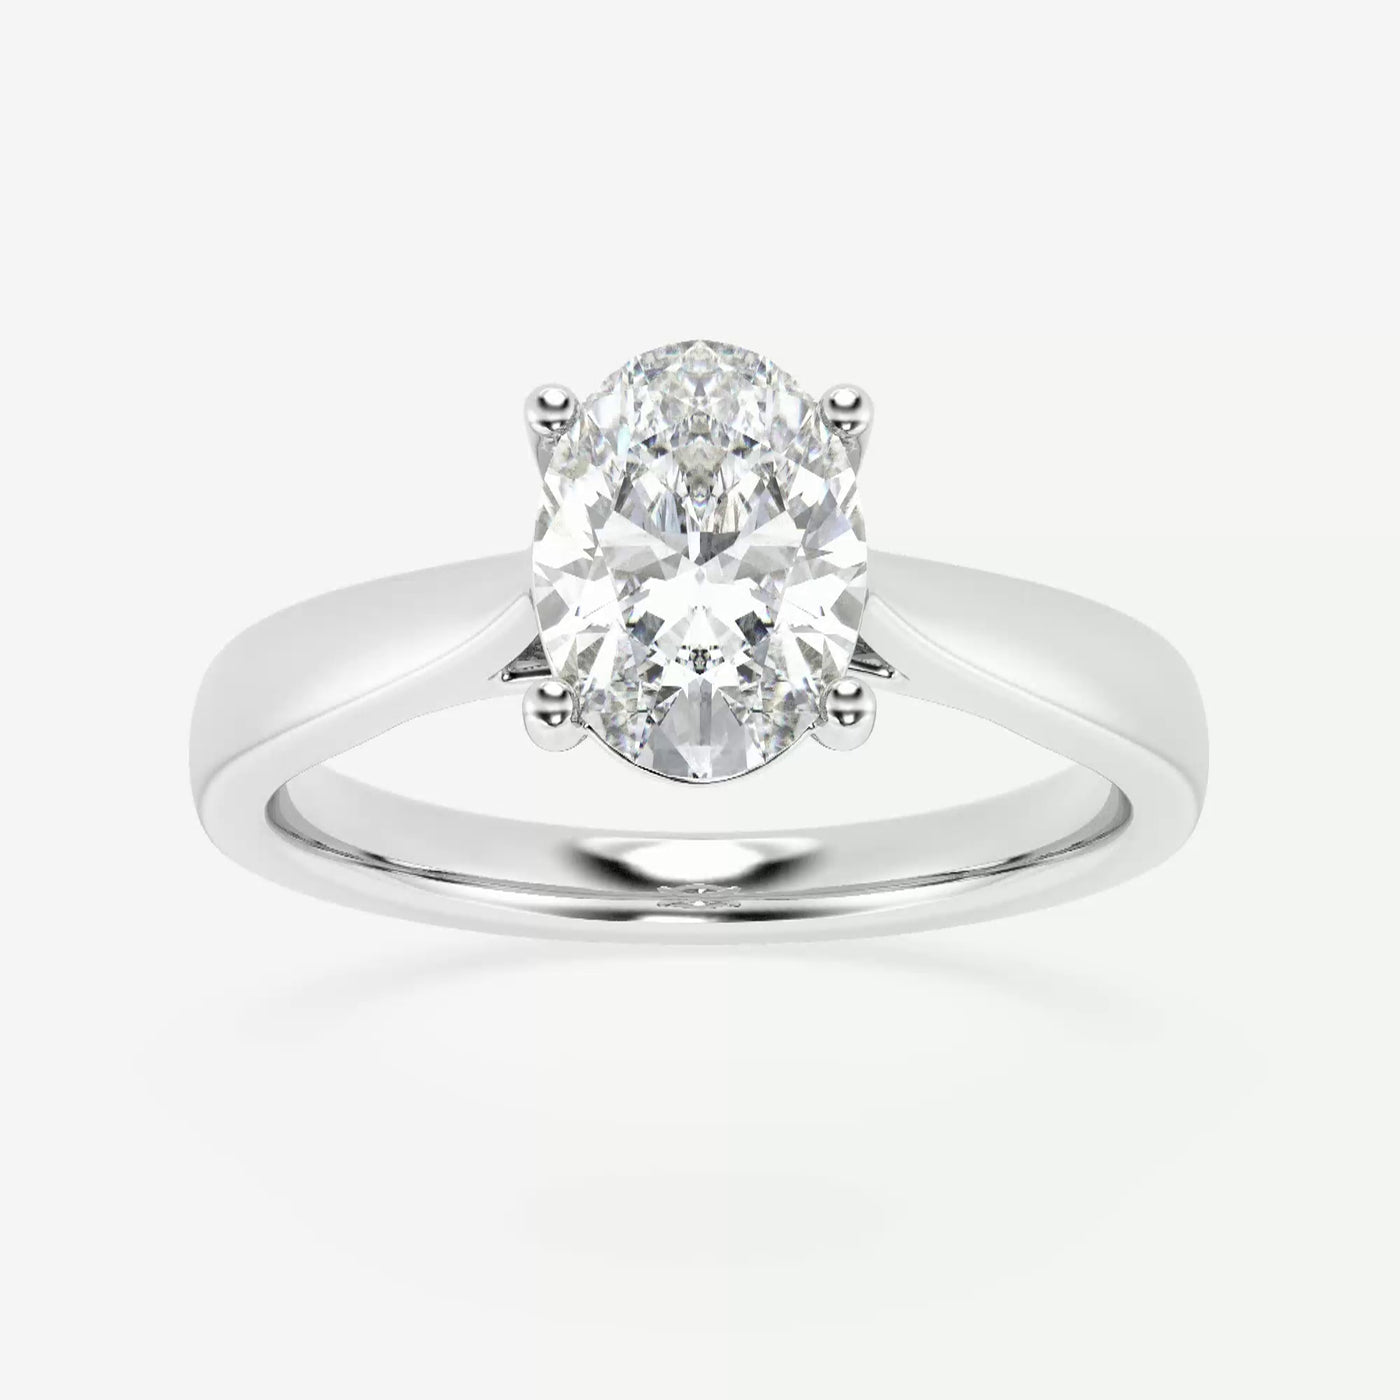 _main_image@SKU:LGD-JOR1095-PL4~#carat_1.50#diamond-quality_fg,-vs2+#metal_platinum